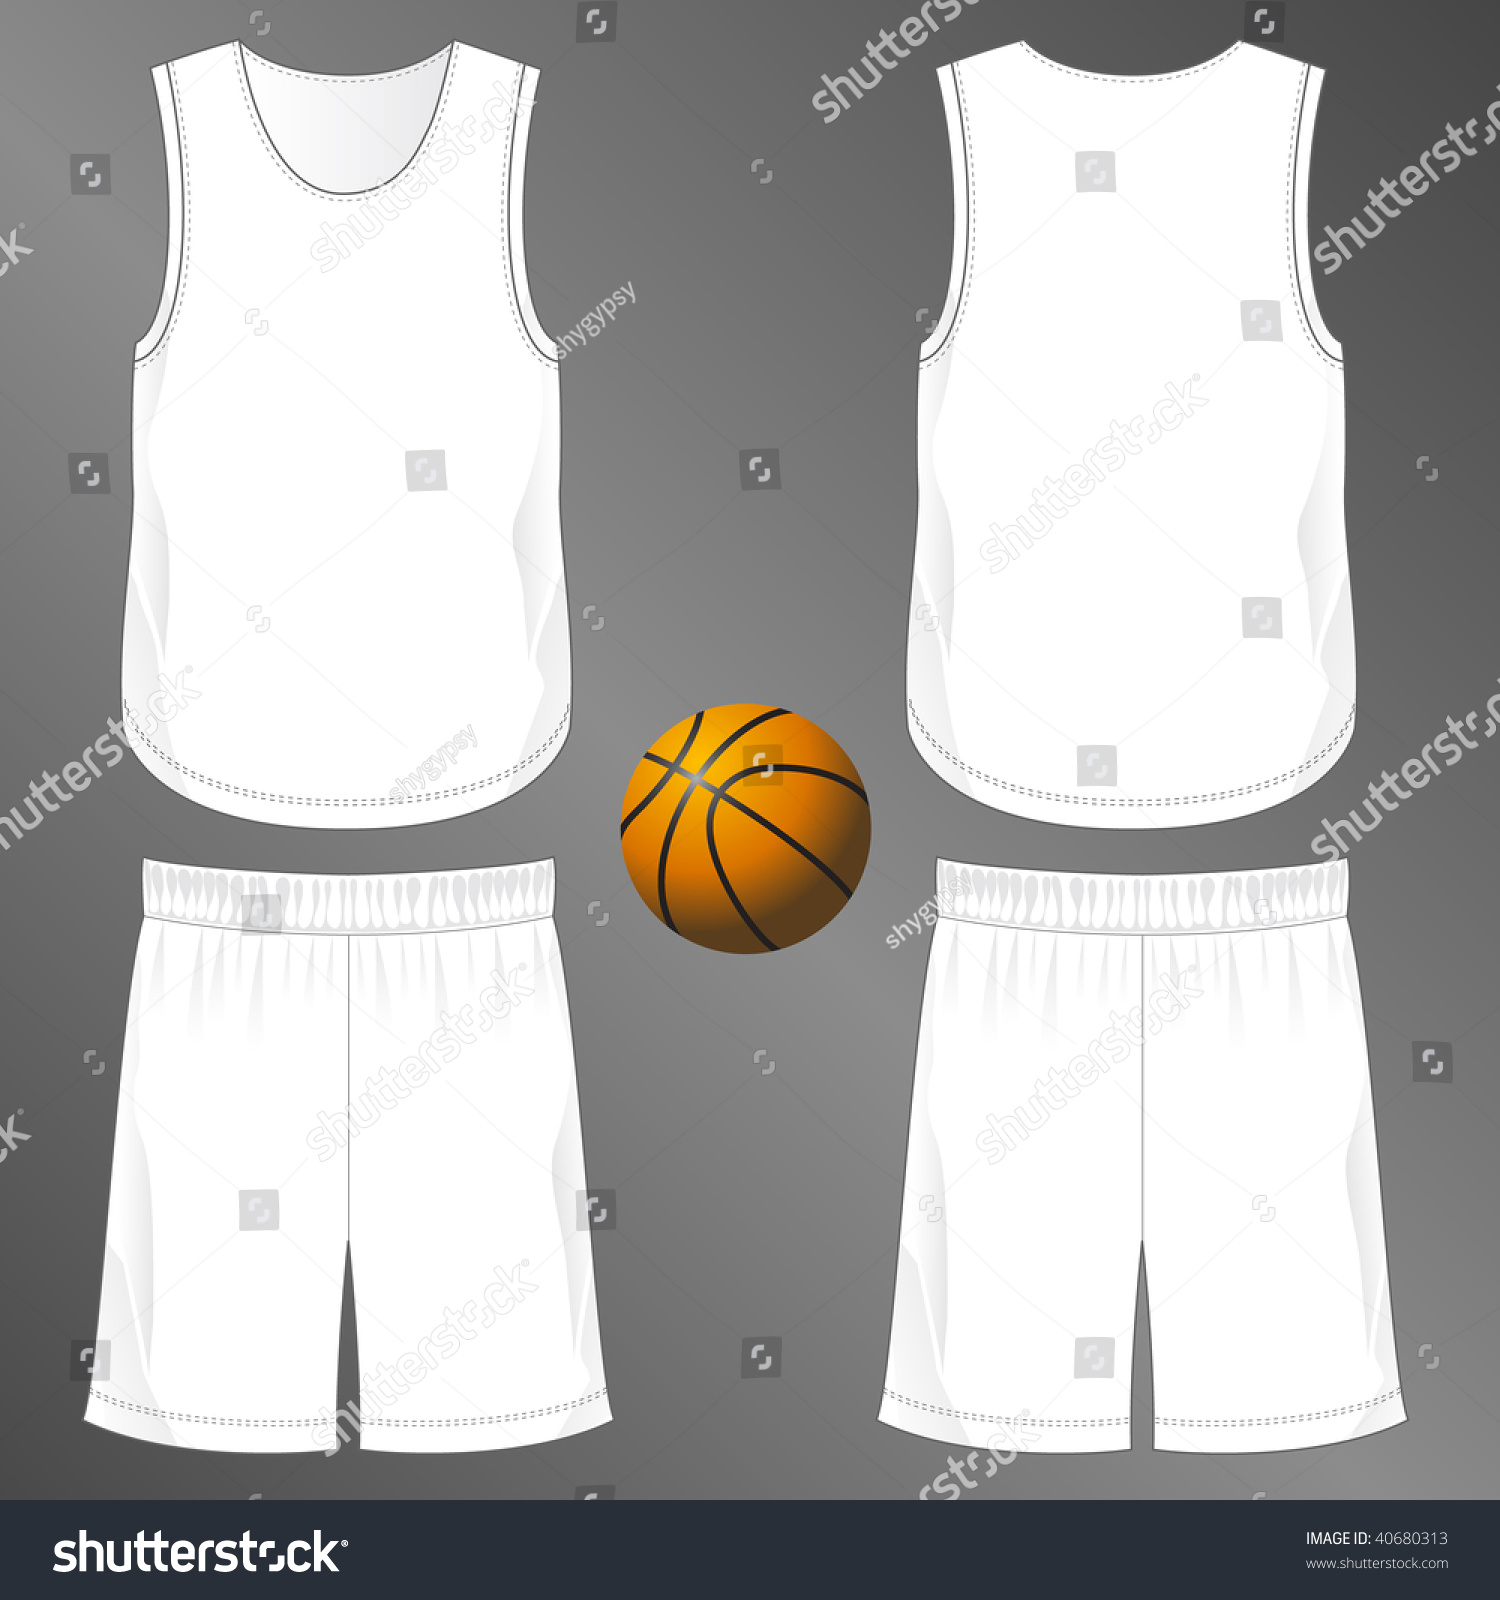 Sports Series Realistic Team Basketball Uniform Stock Illustration ...